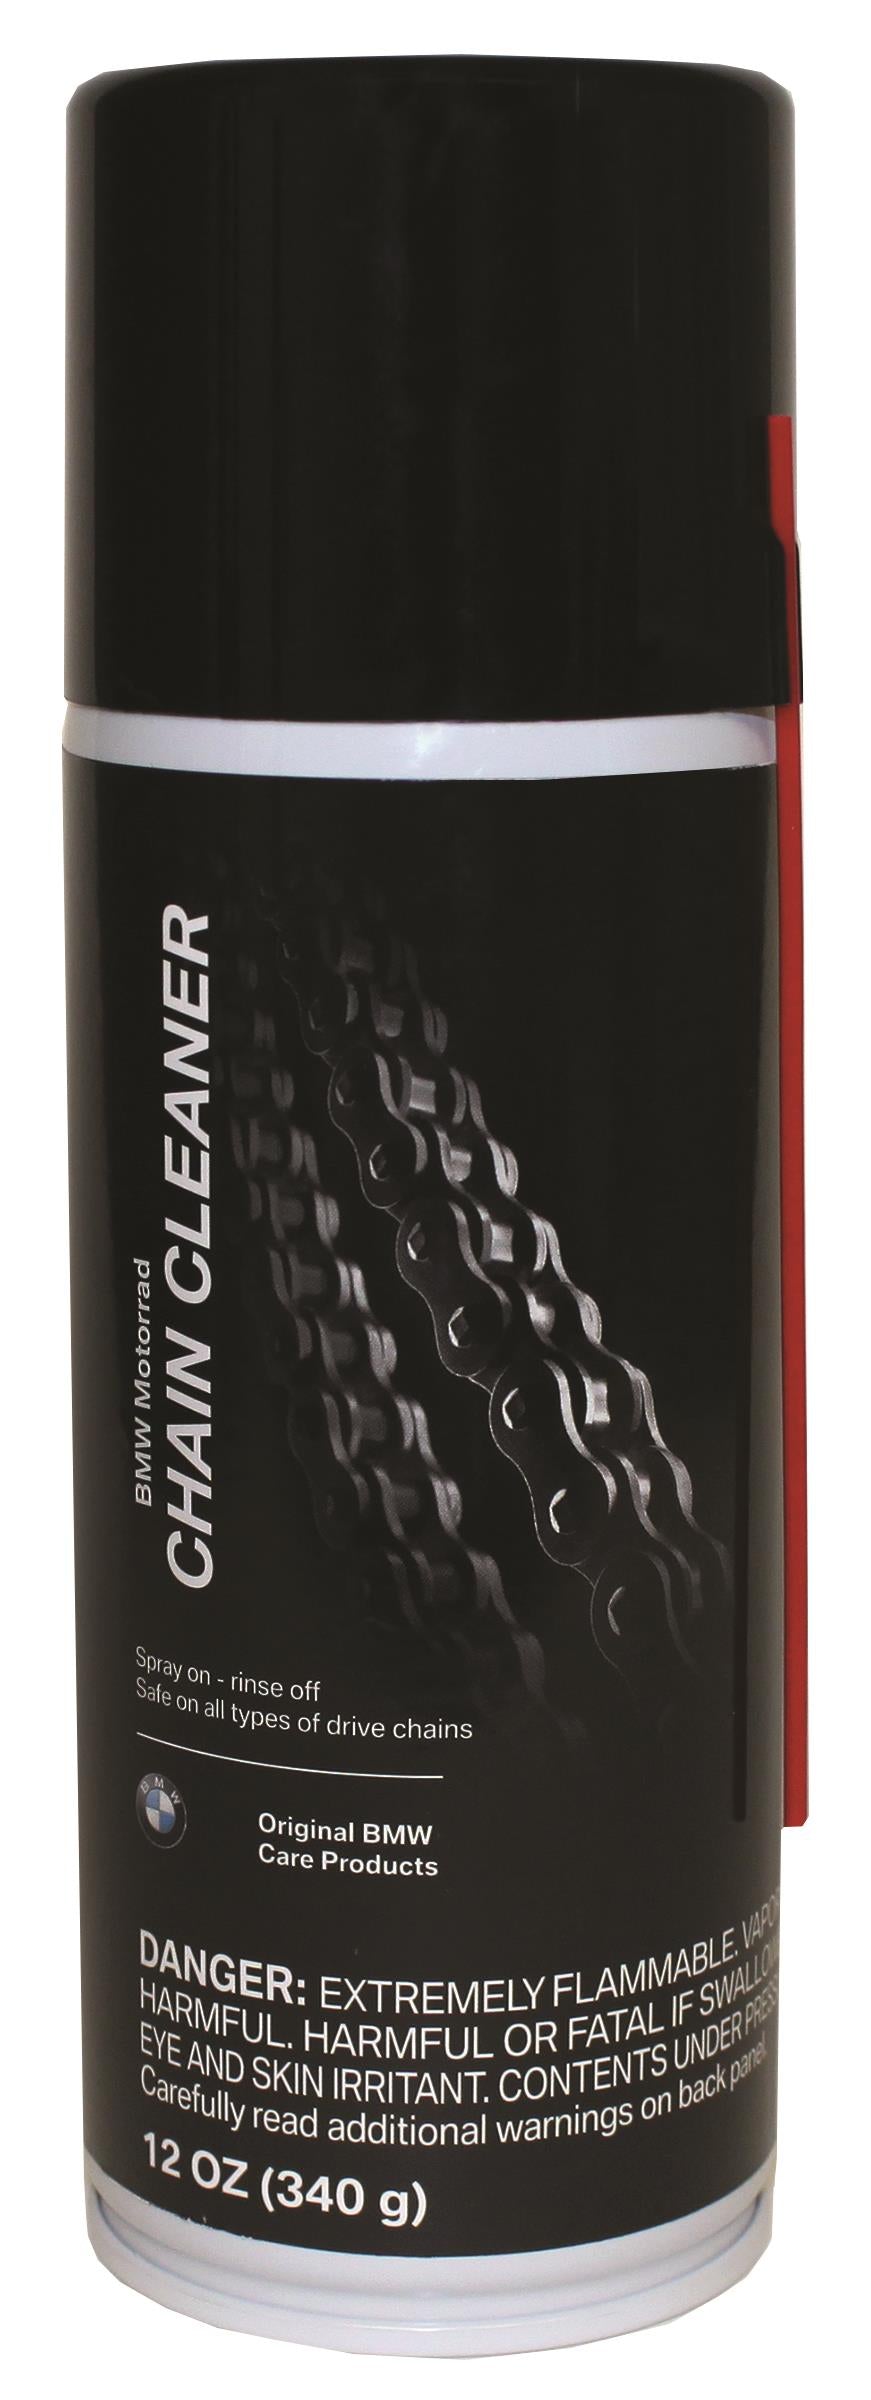 BMW Motorrad Chain Cleaner - 82 14 2 327 629 - BMWSuperShop.com